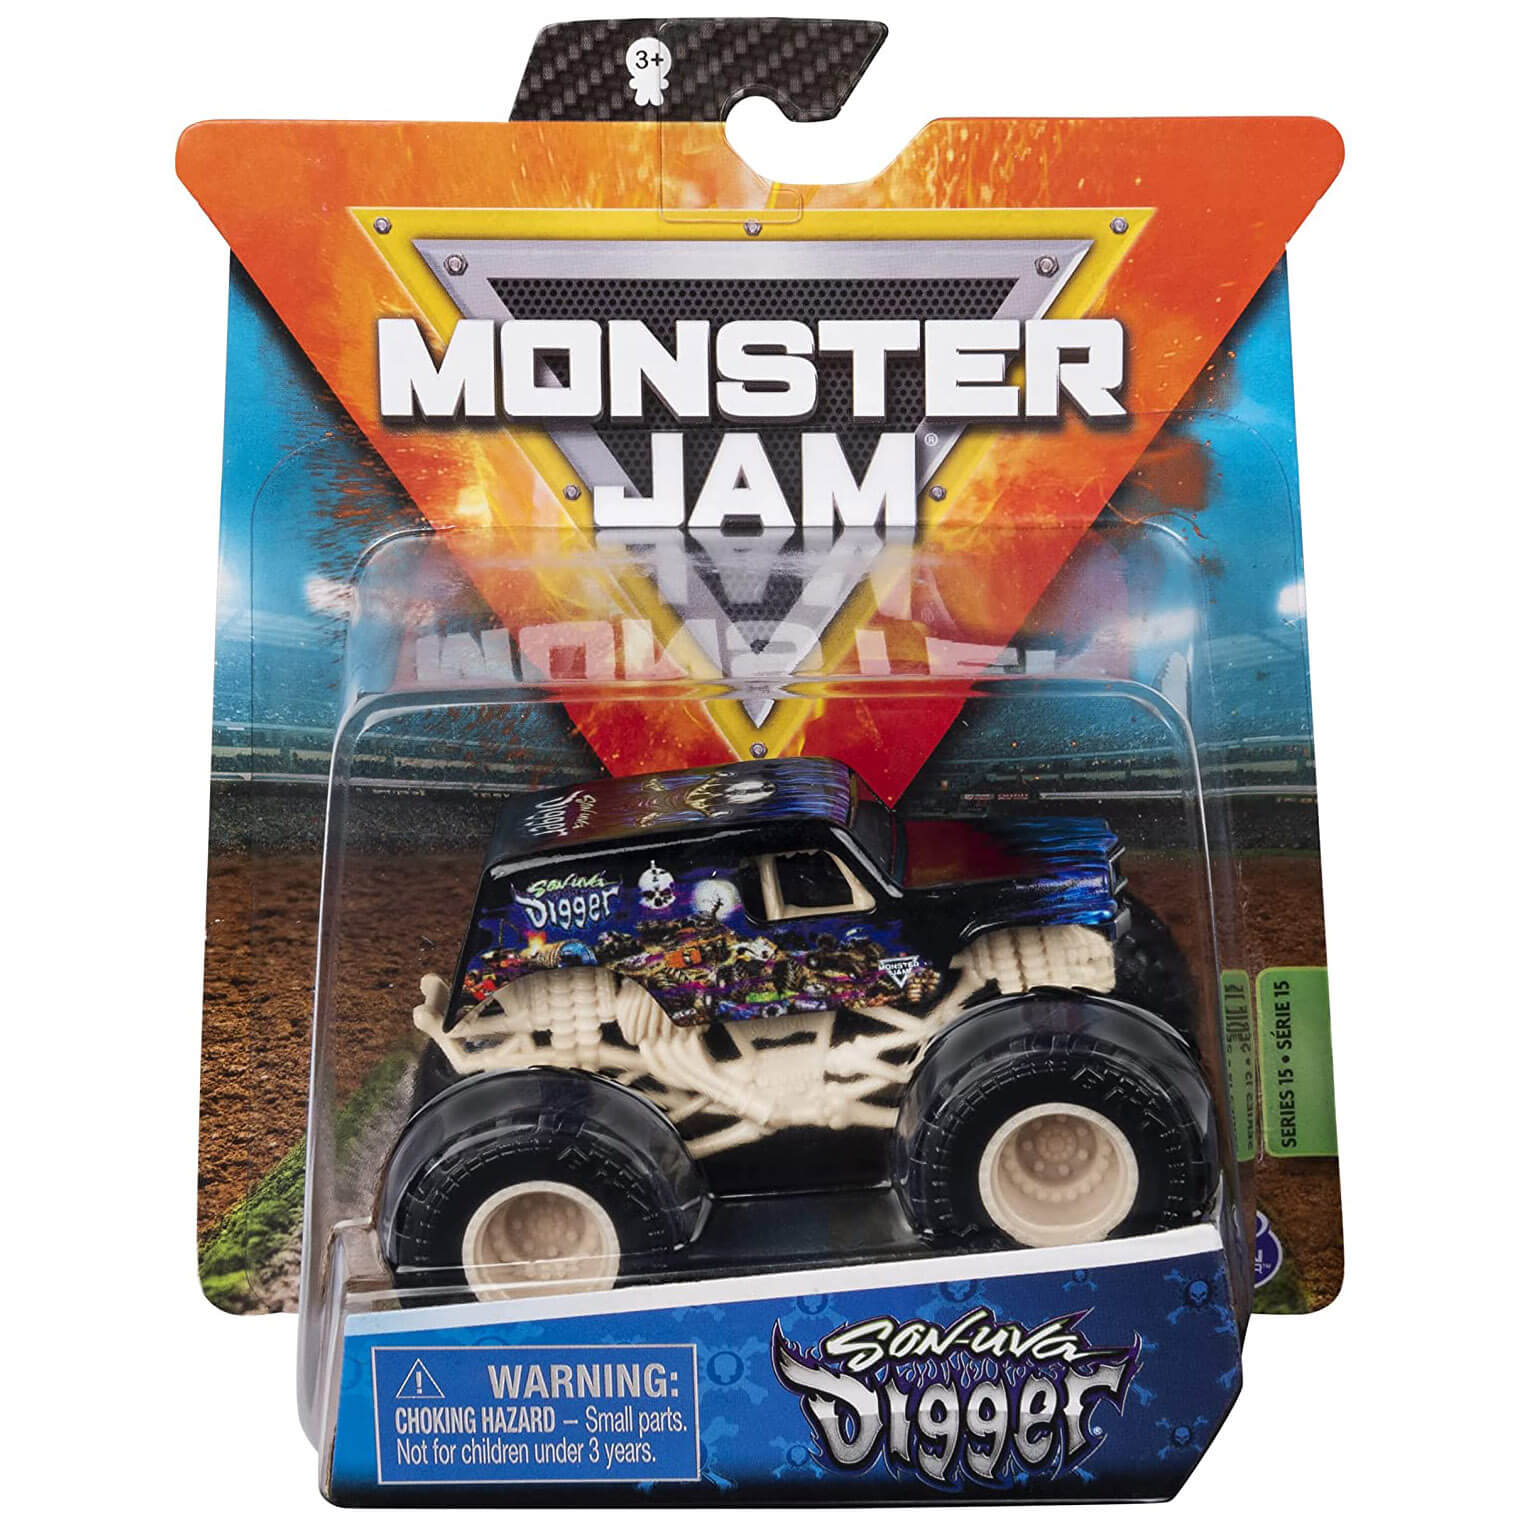 Monster Jam Son-Uva Digger 1:64 Scale Diecast Vehicle